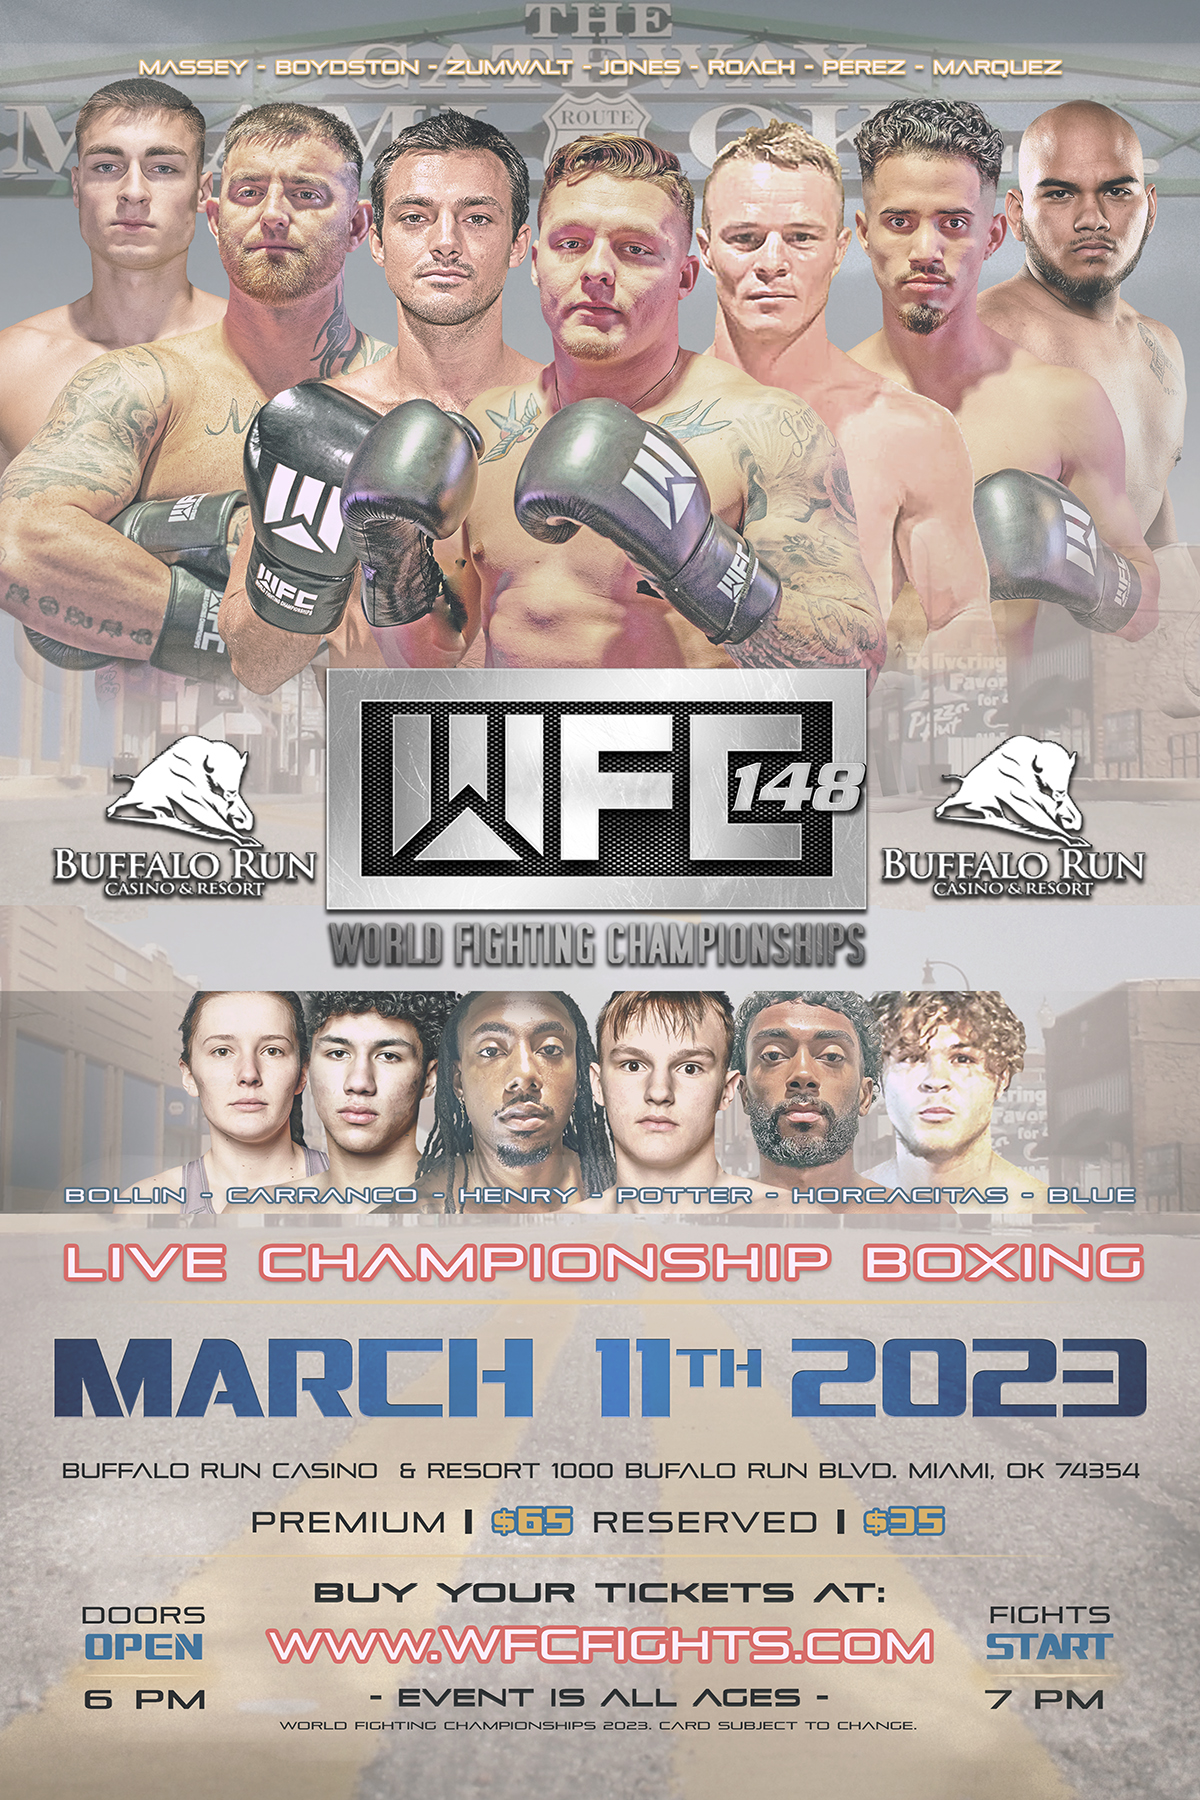 WFC 148 LIVE BOXING Saturday March 11th,2023 at Buffalo Run Casino